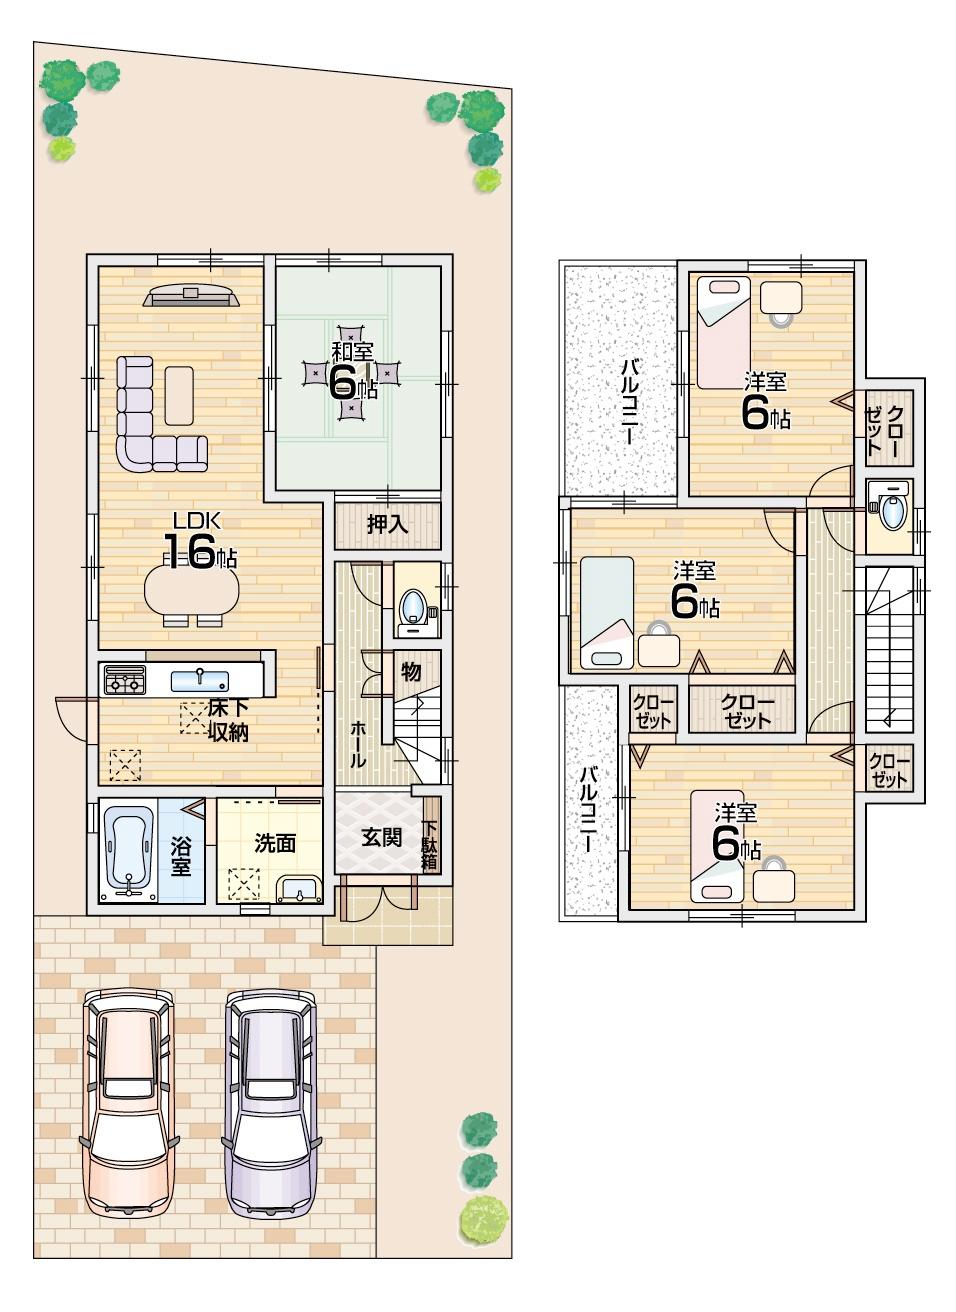 Floor plan. 22,800,000 yen, 4LDK, Land area 155.66 sq m , Building area 93.15 sq m floor plan Floor plan of the room in all room 6 quires more! 